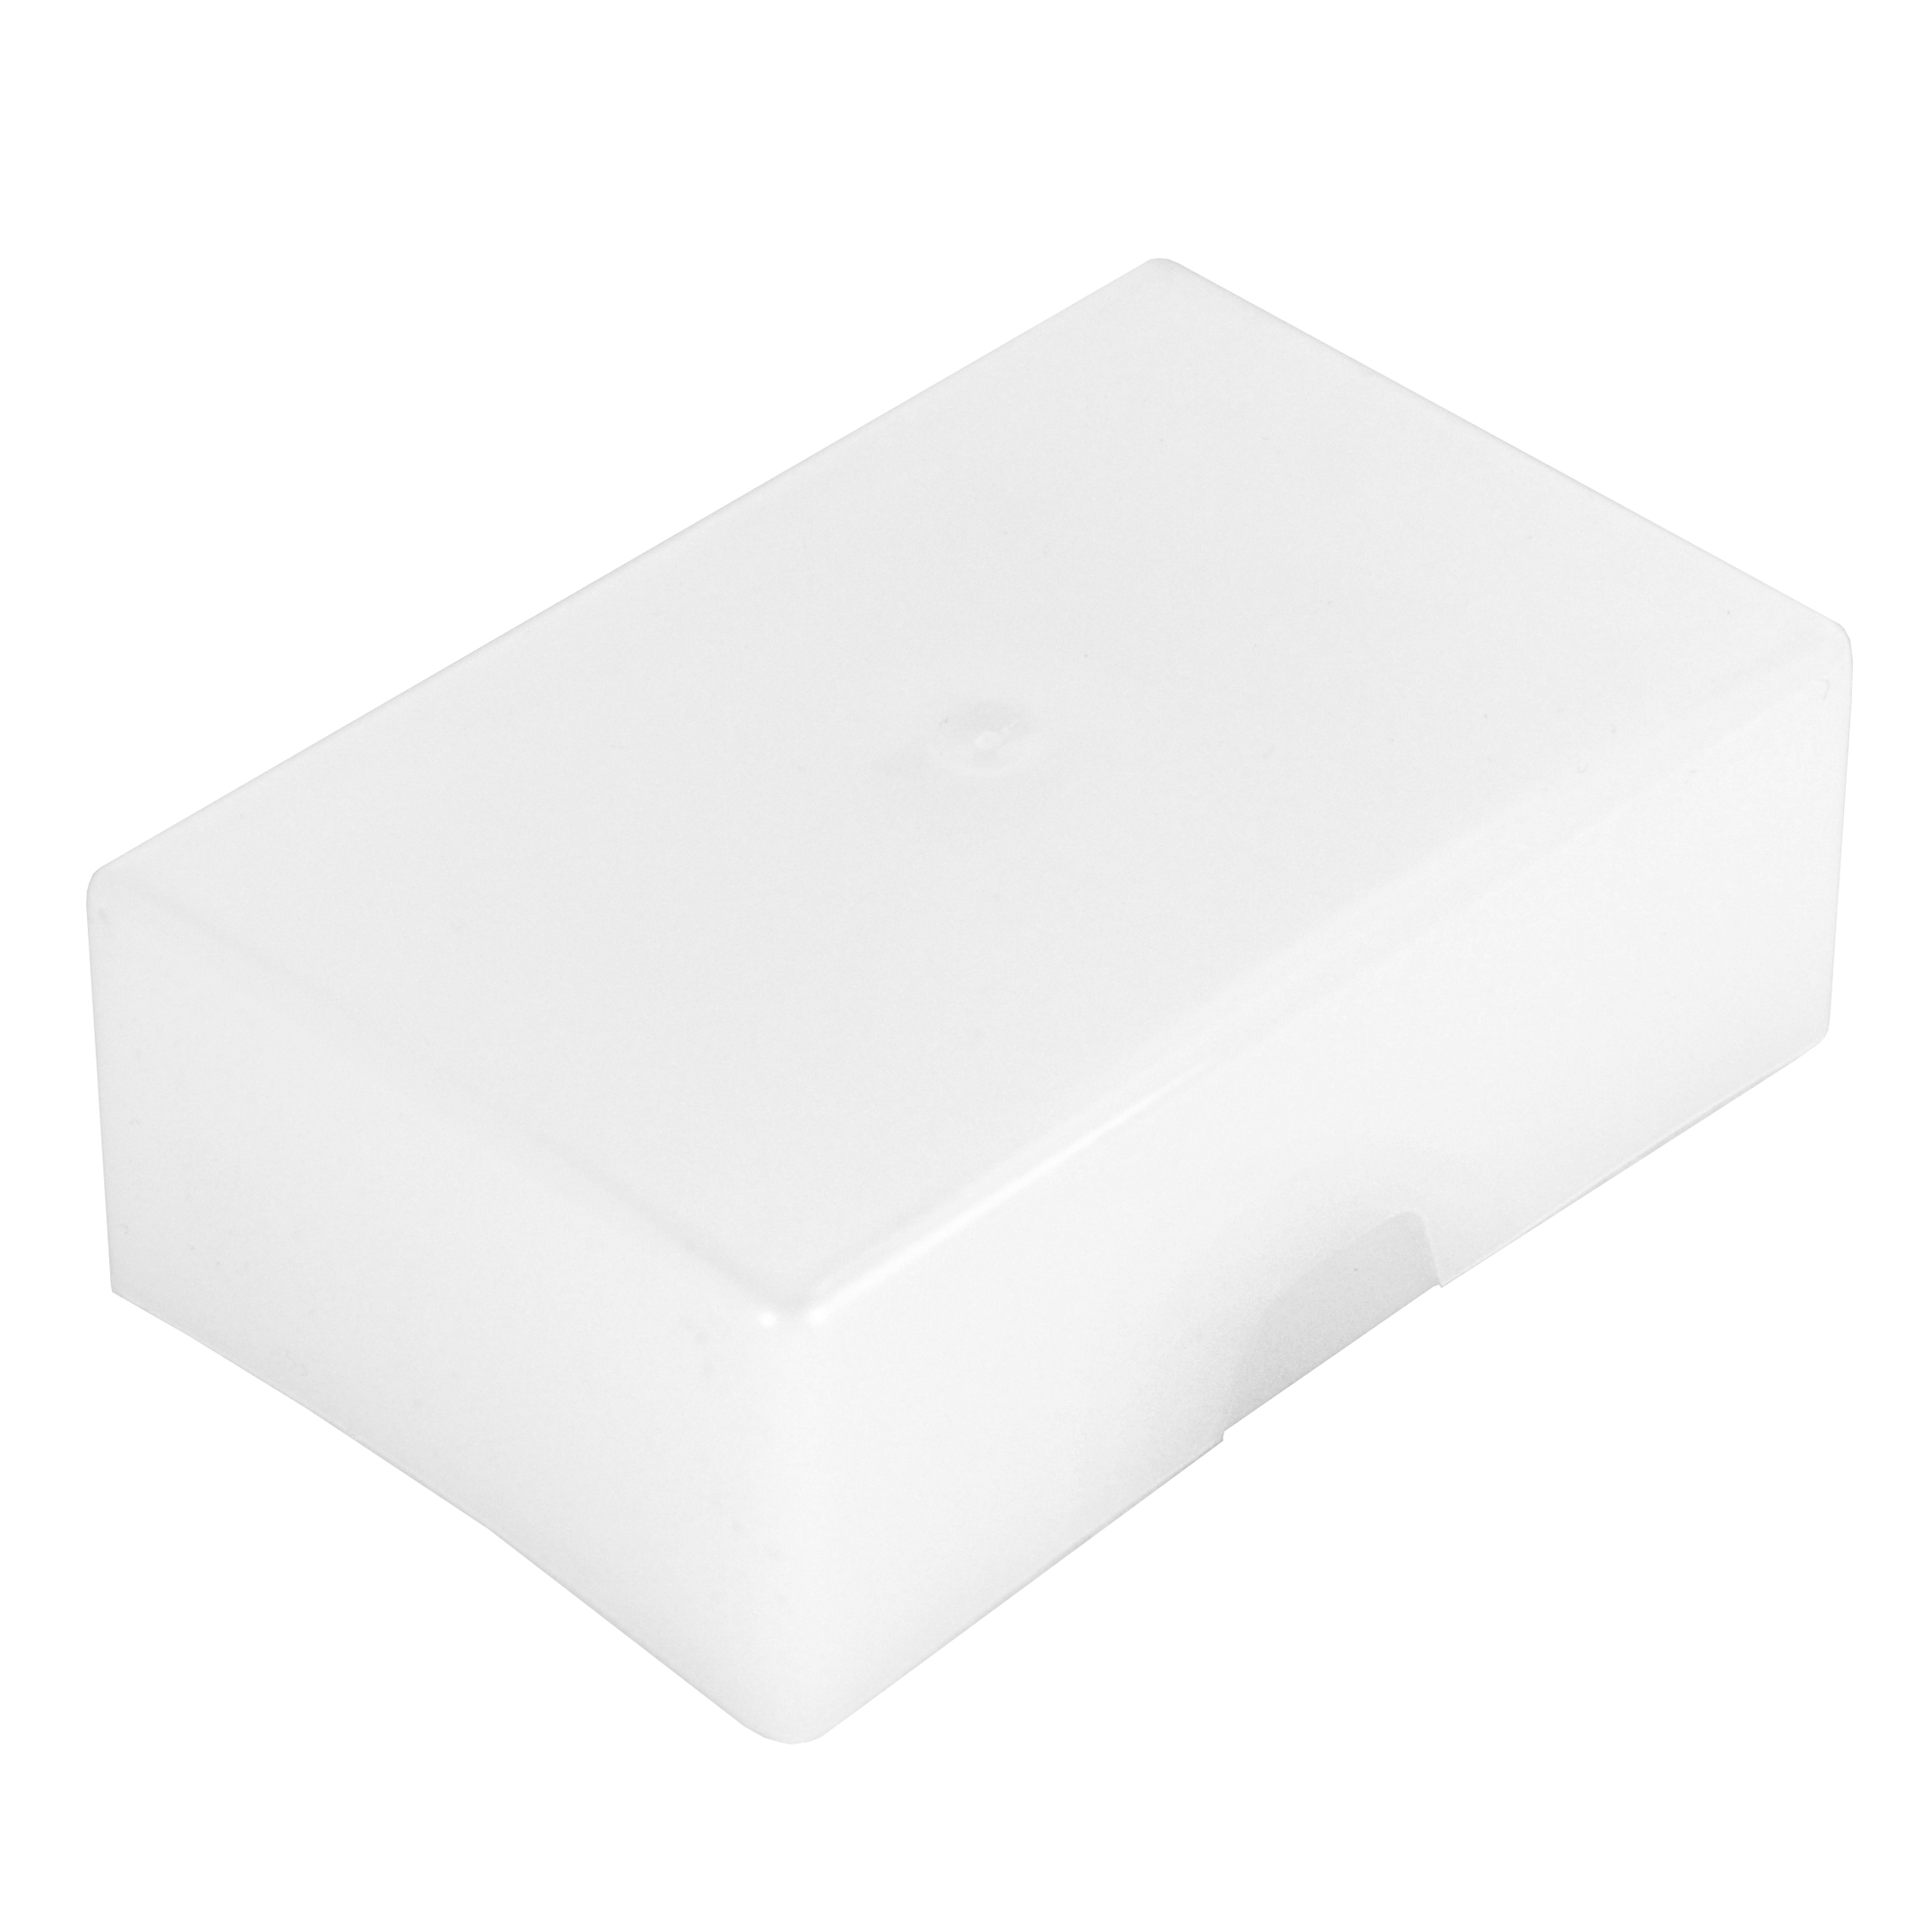 35mm Business Card Box, White, Semi-Transparent, TOUGH - Trade